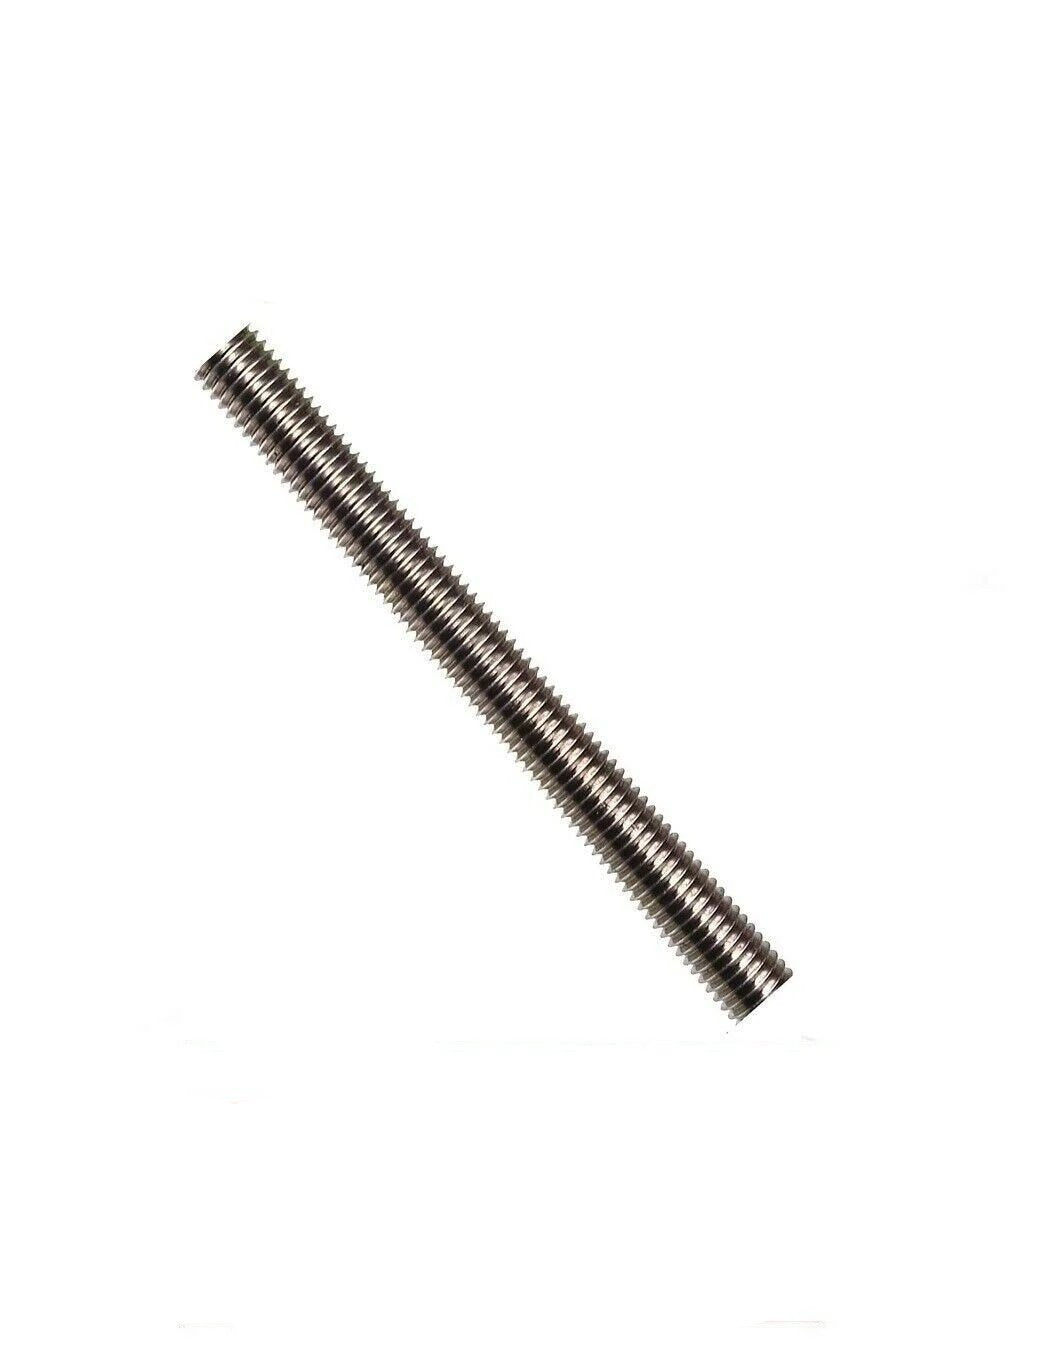 3/4"-10 x 36" Stainless Steel Threaded Rod 304 Stainless AllThread